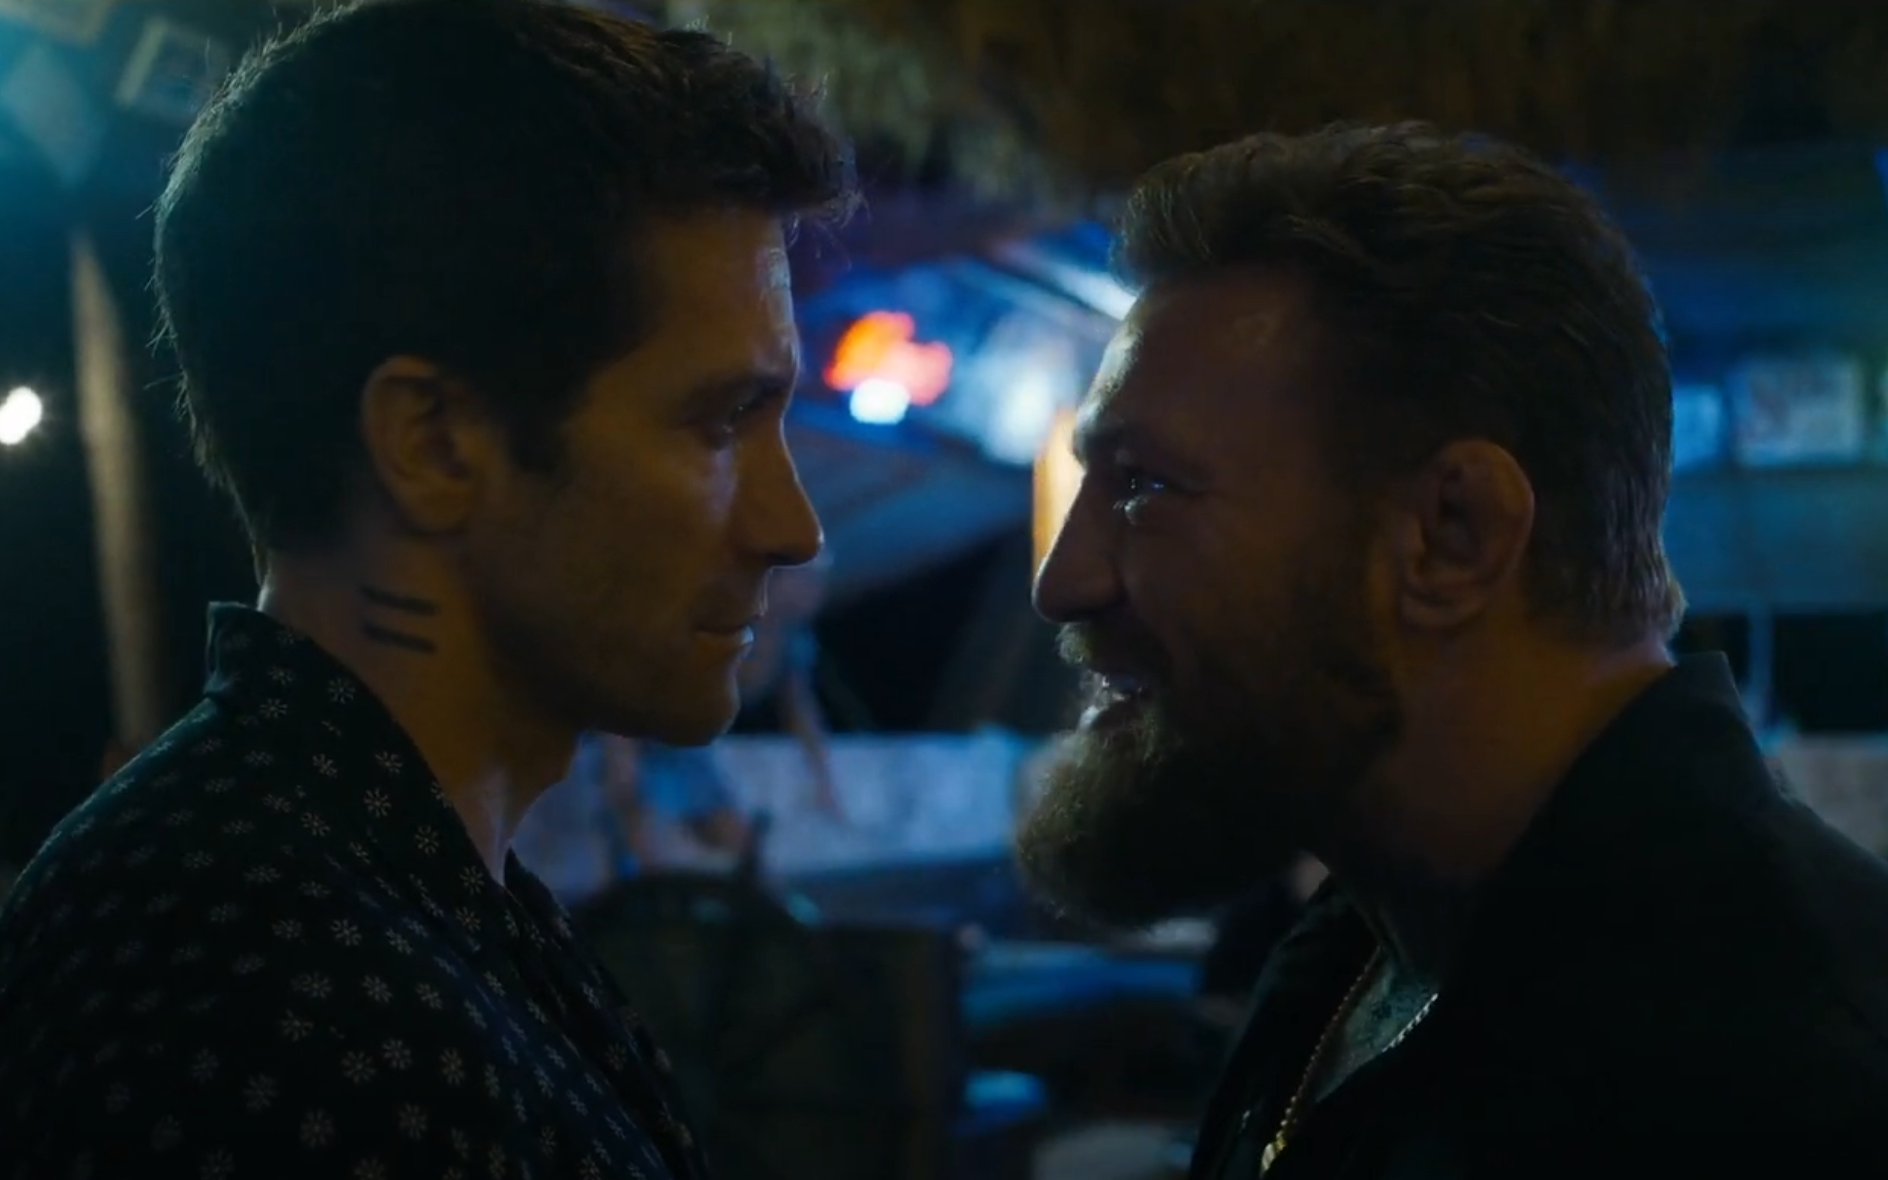 Road House - Jake Gyllenhaal vs. Conor McGregor 